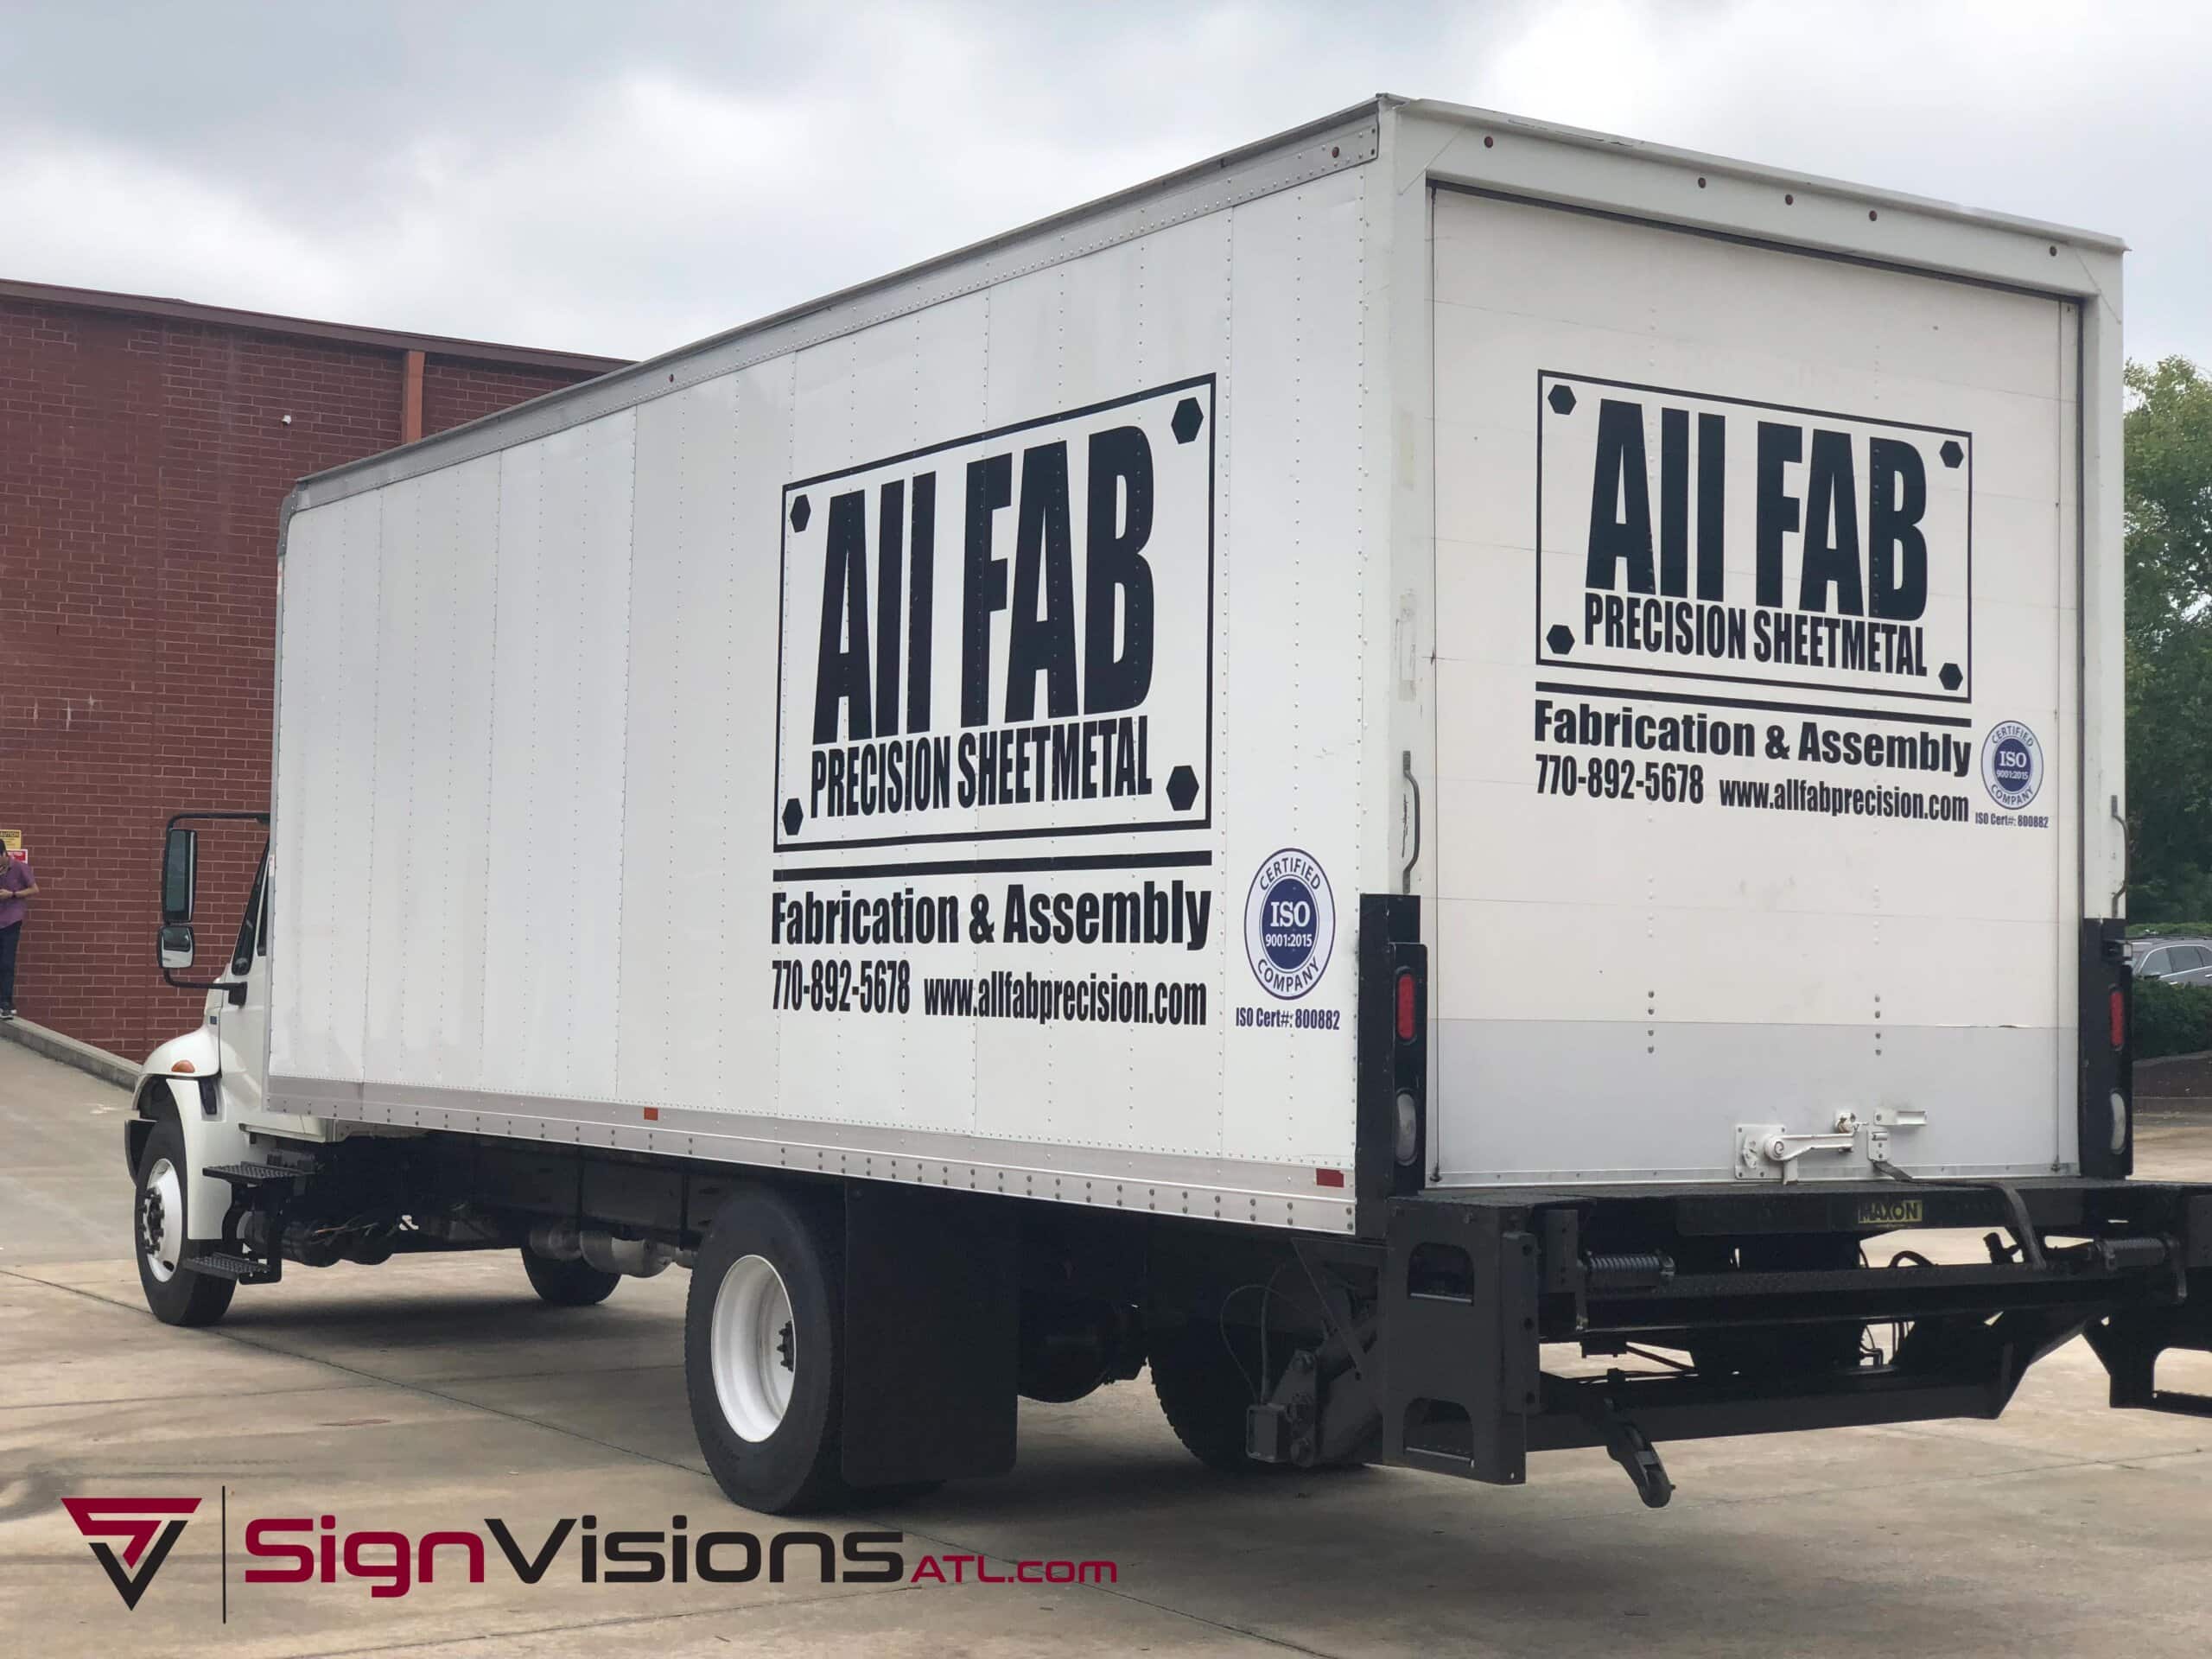 Brand wit Box Truck Graphics in Fairburn GA